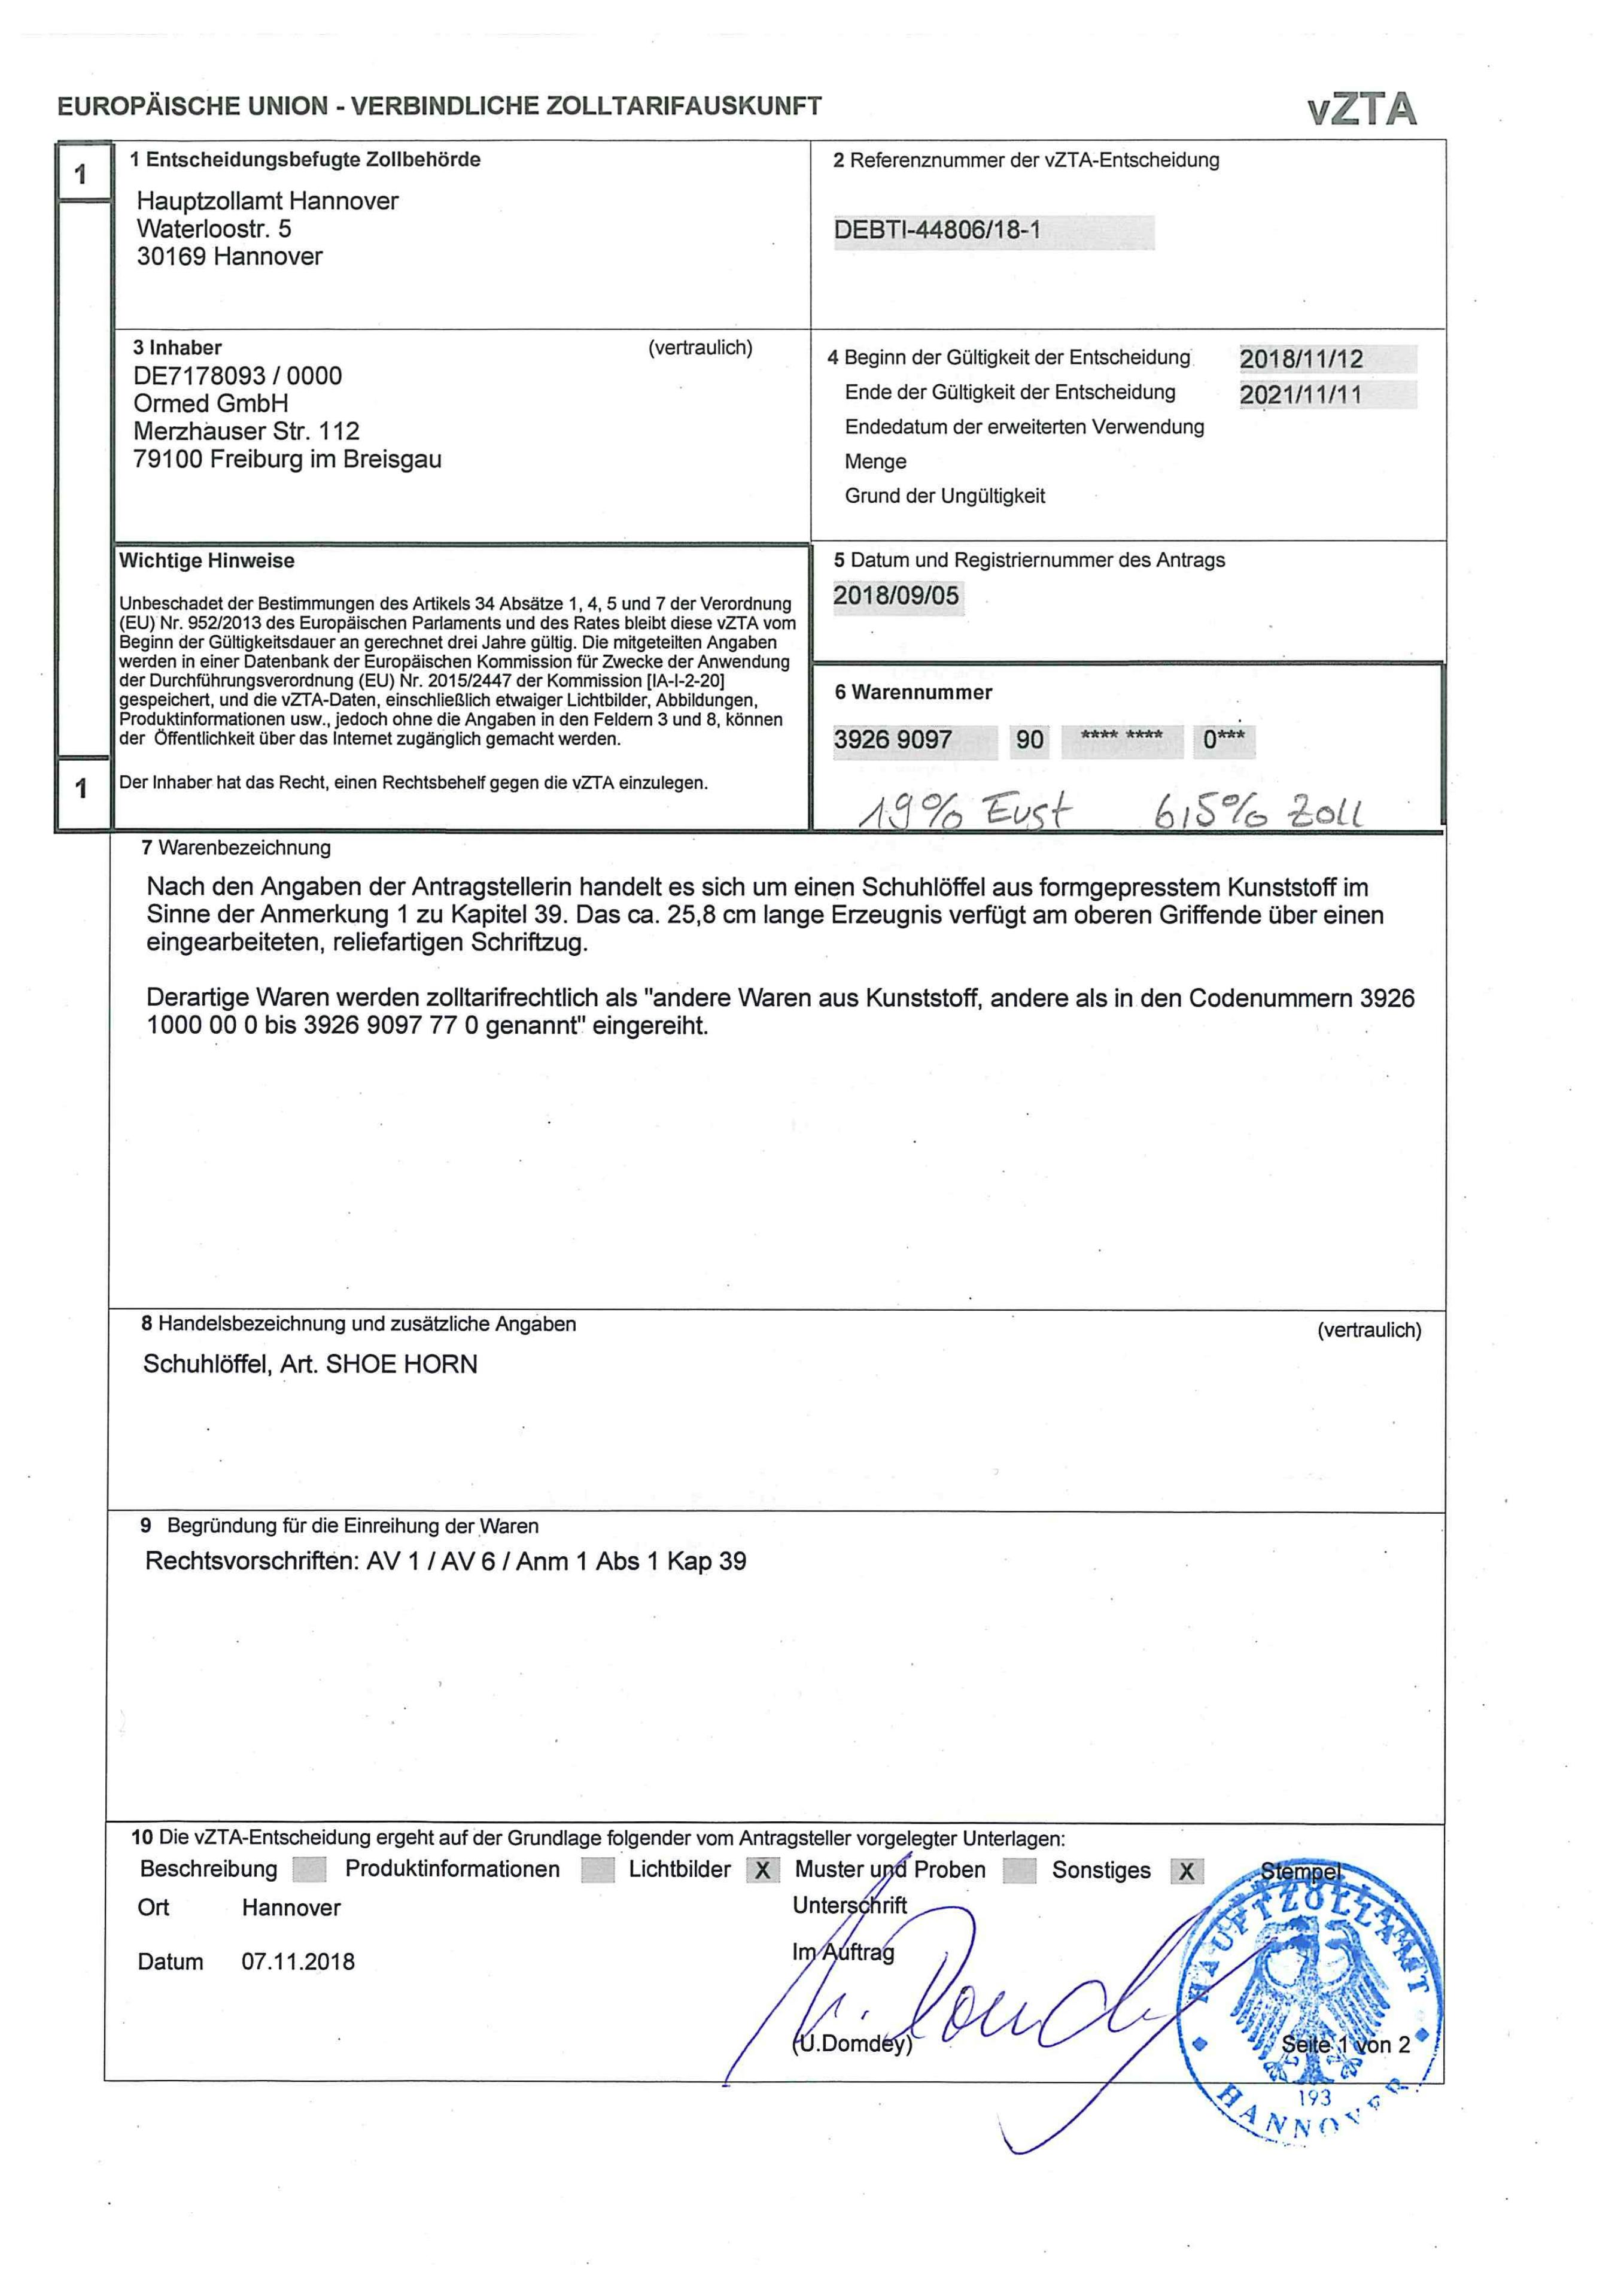 DEBTI-44806-18-1 Schuhlöffel SHOE HORN 39269097900.pdf